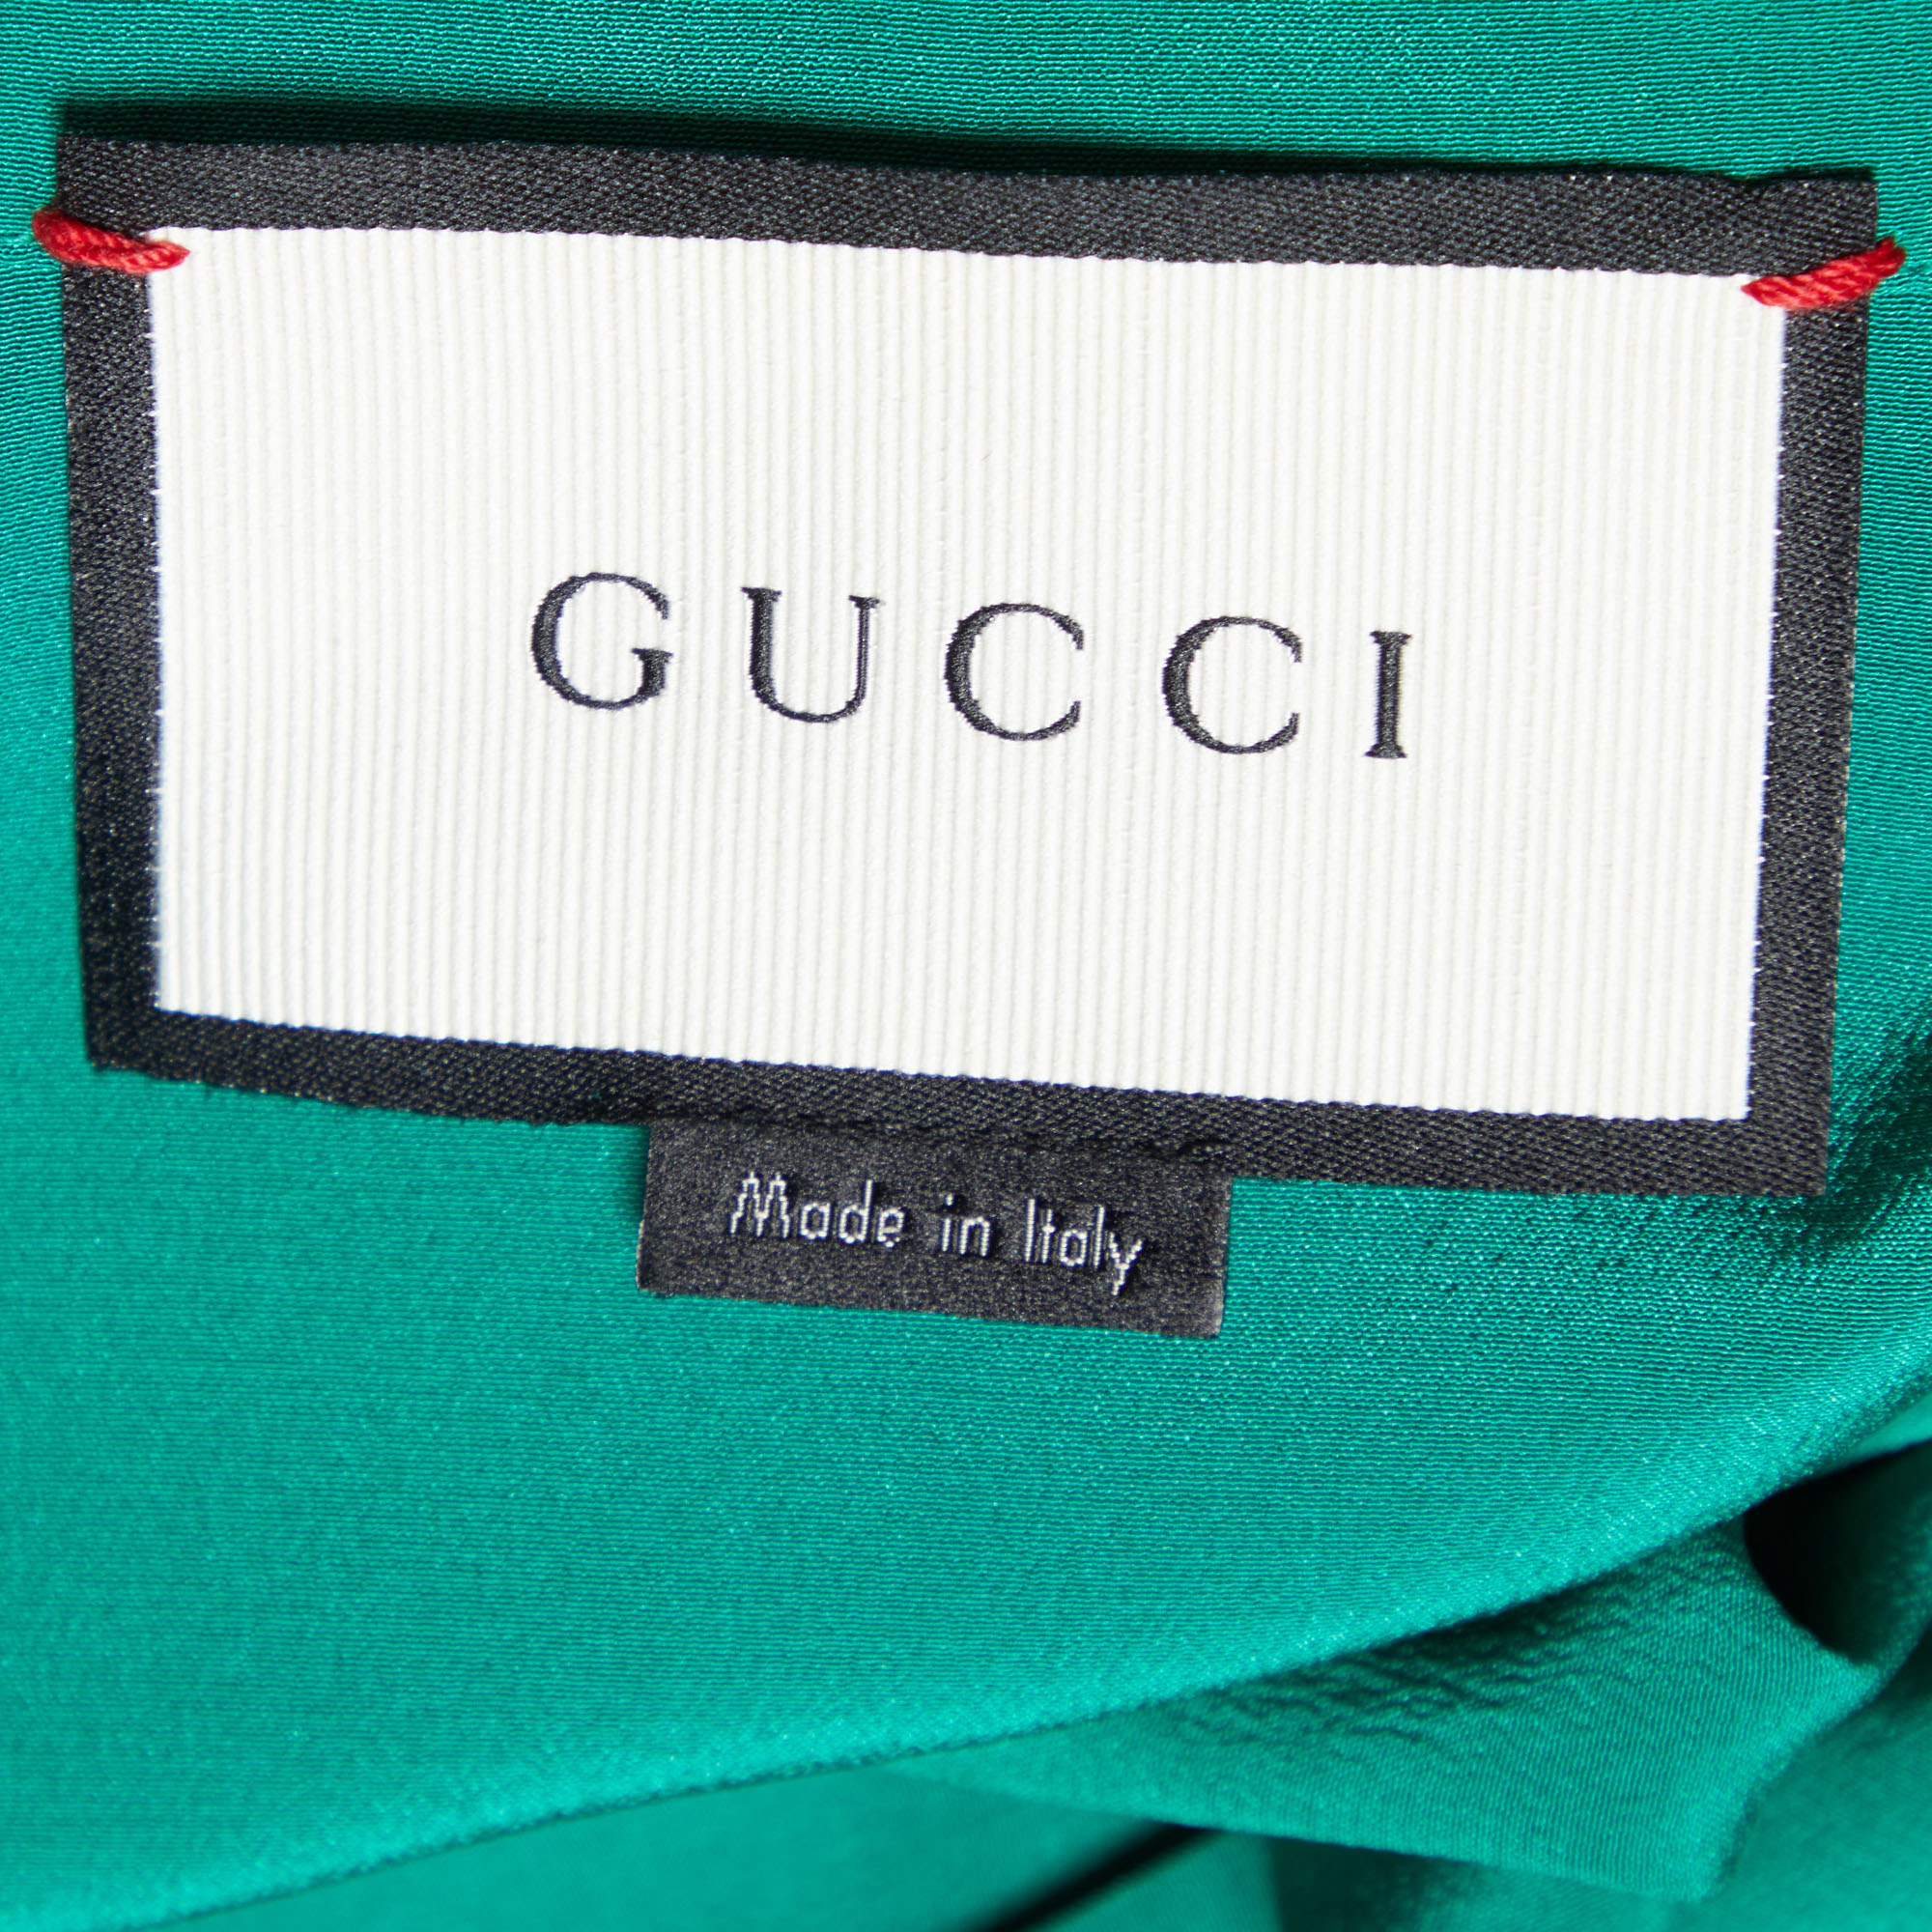 Gucci Green Silk Ruffle Detail Button Front Shirt M